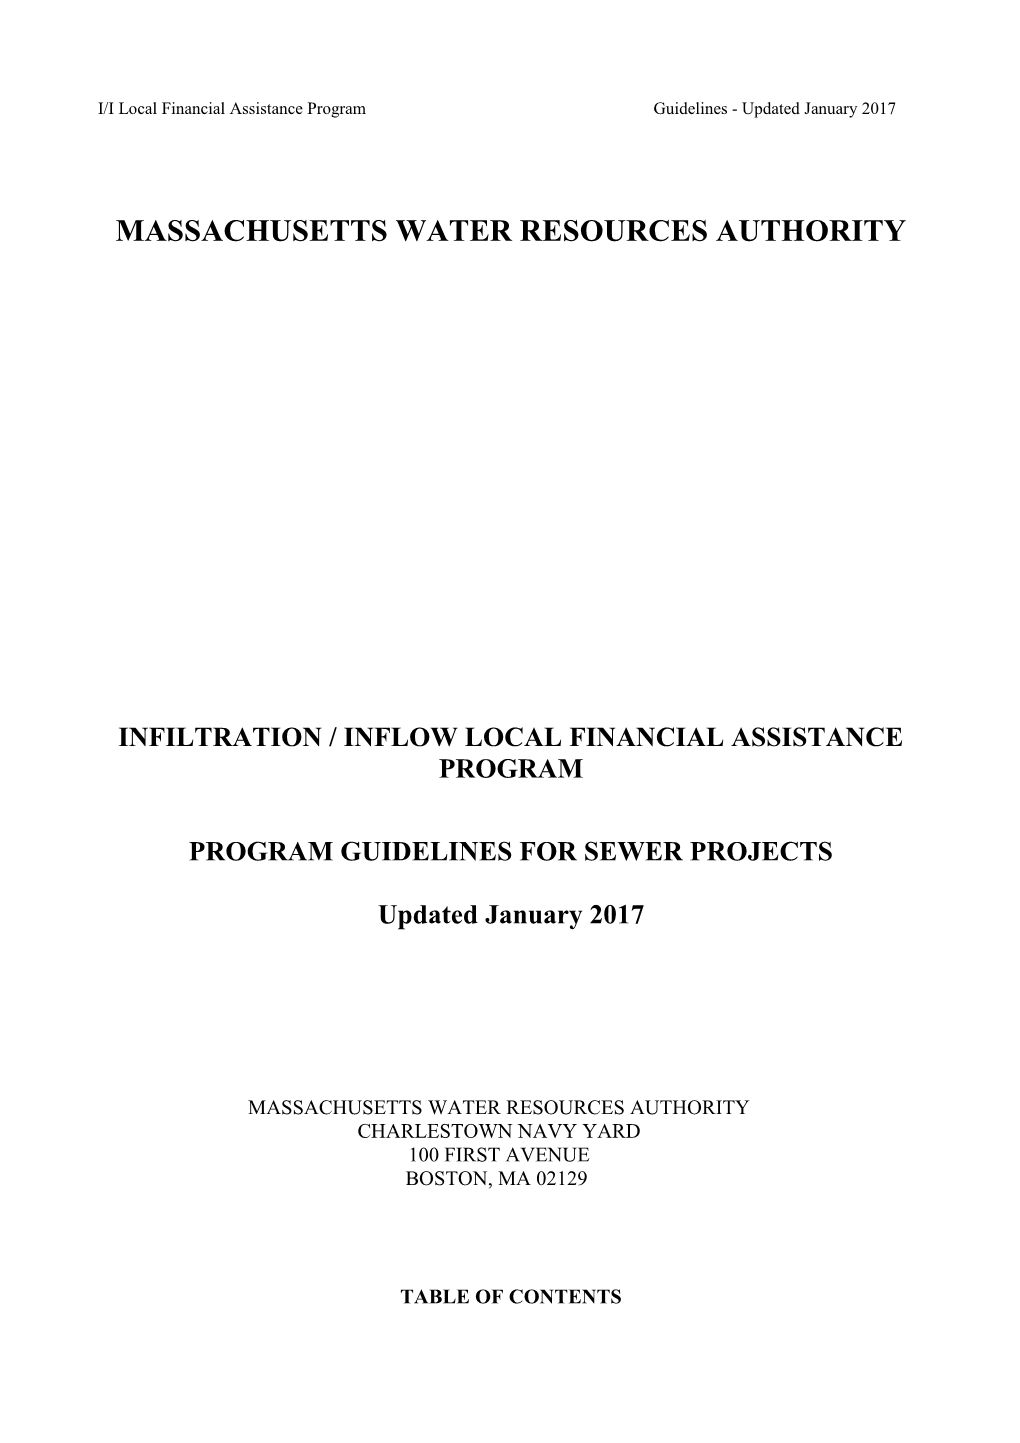 Massachusetts Water Resources Authority s2